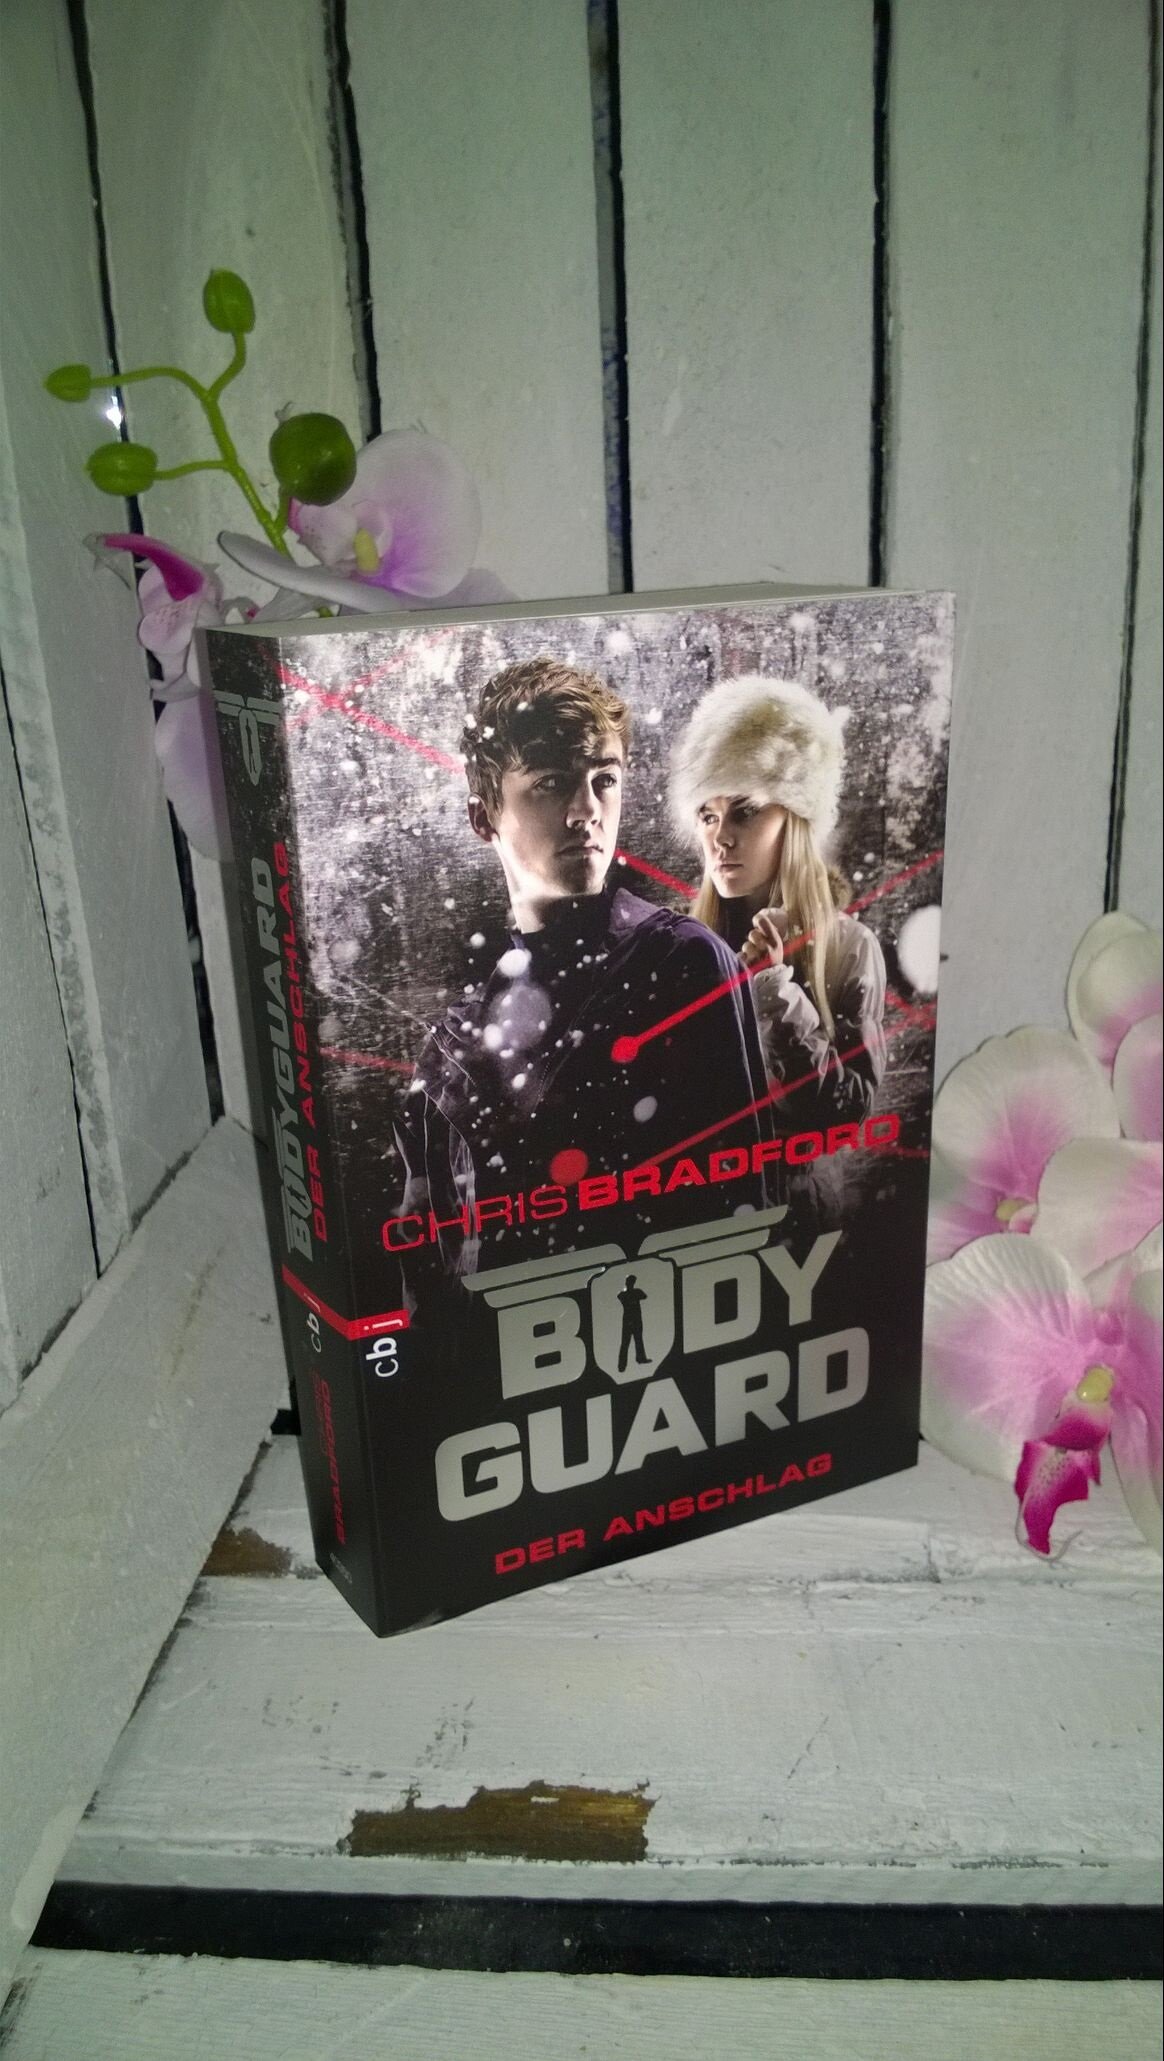 Bodyguard – Der Anschlag Chris Badford